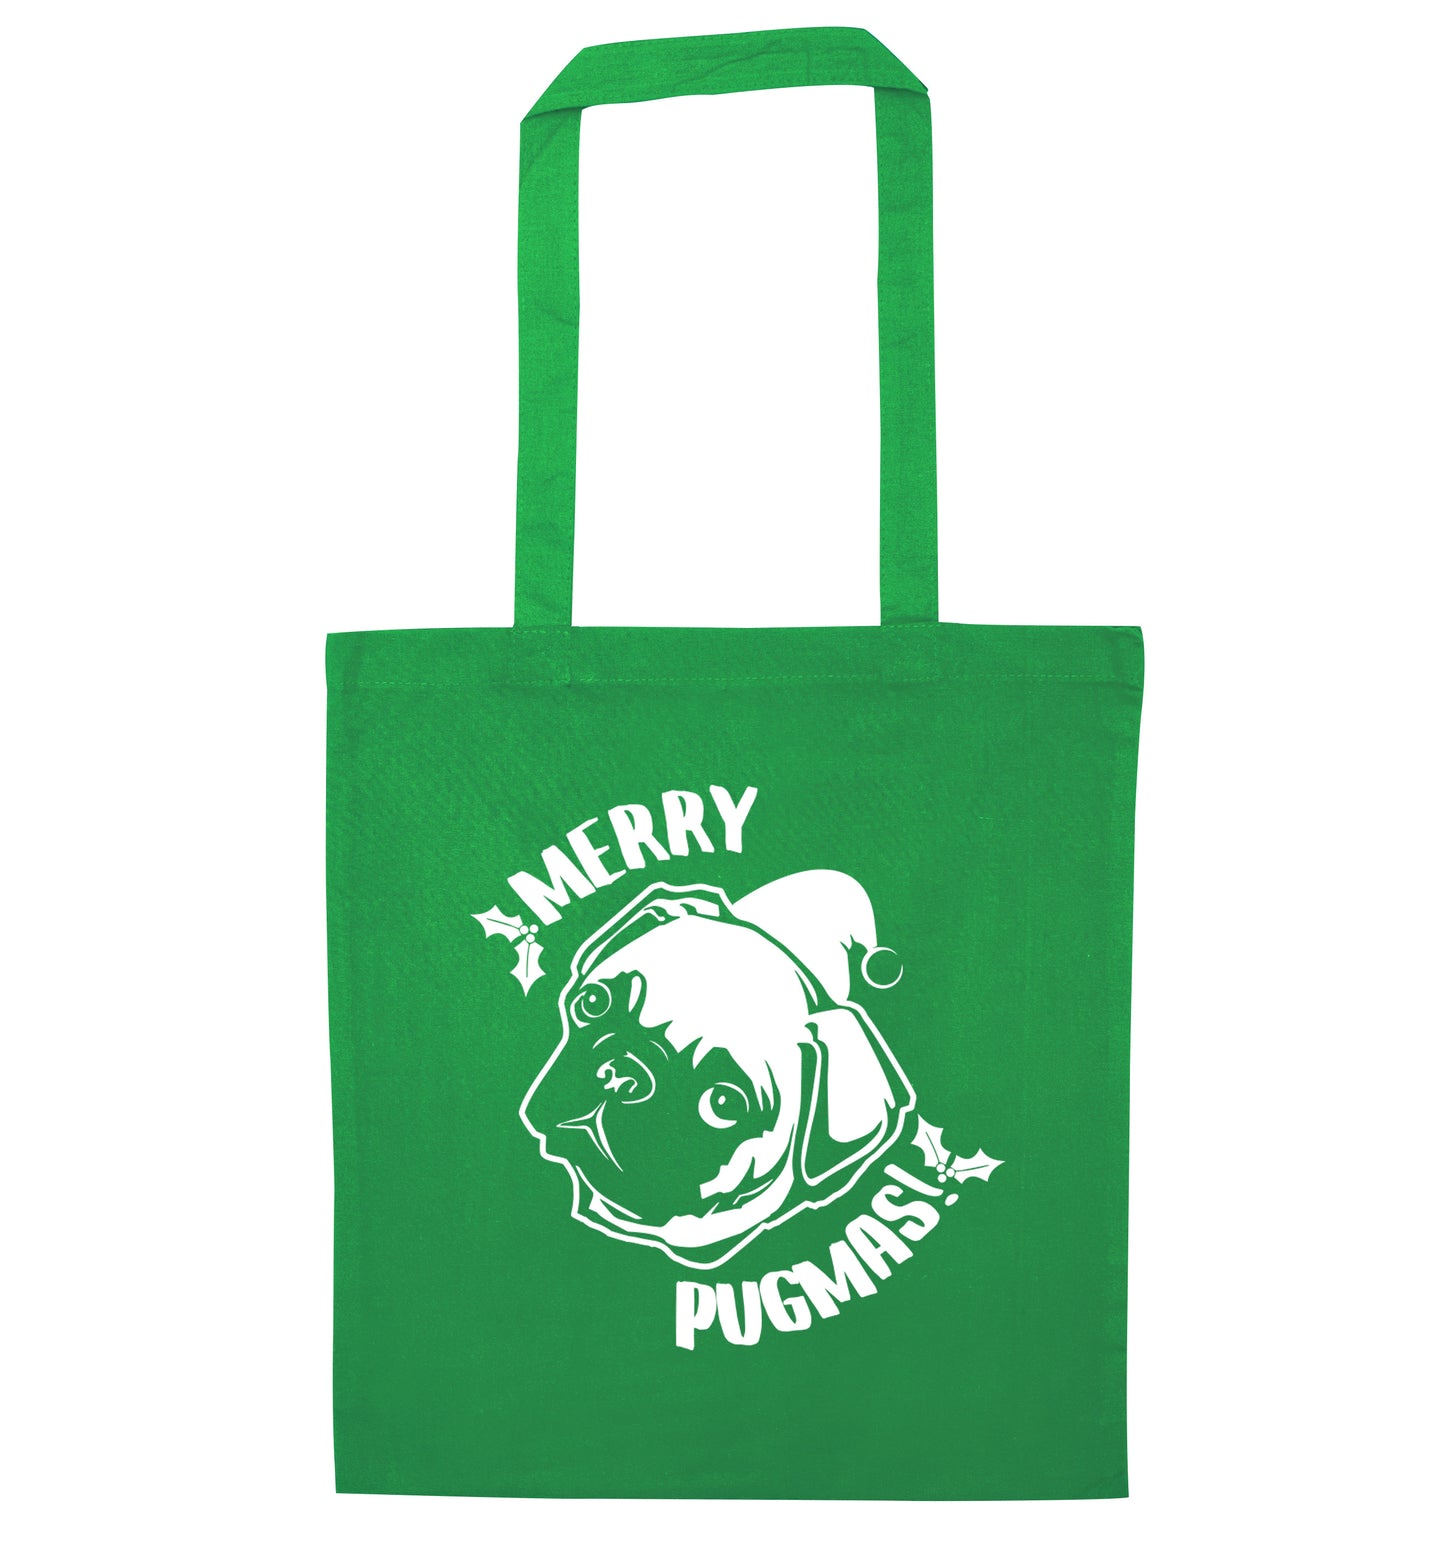 Merry Pugmas green tote bag